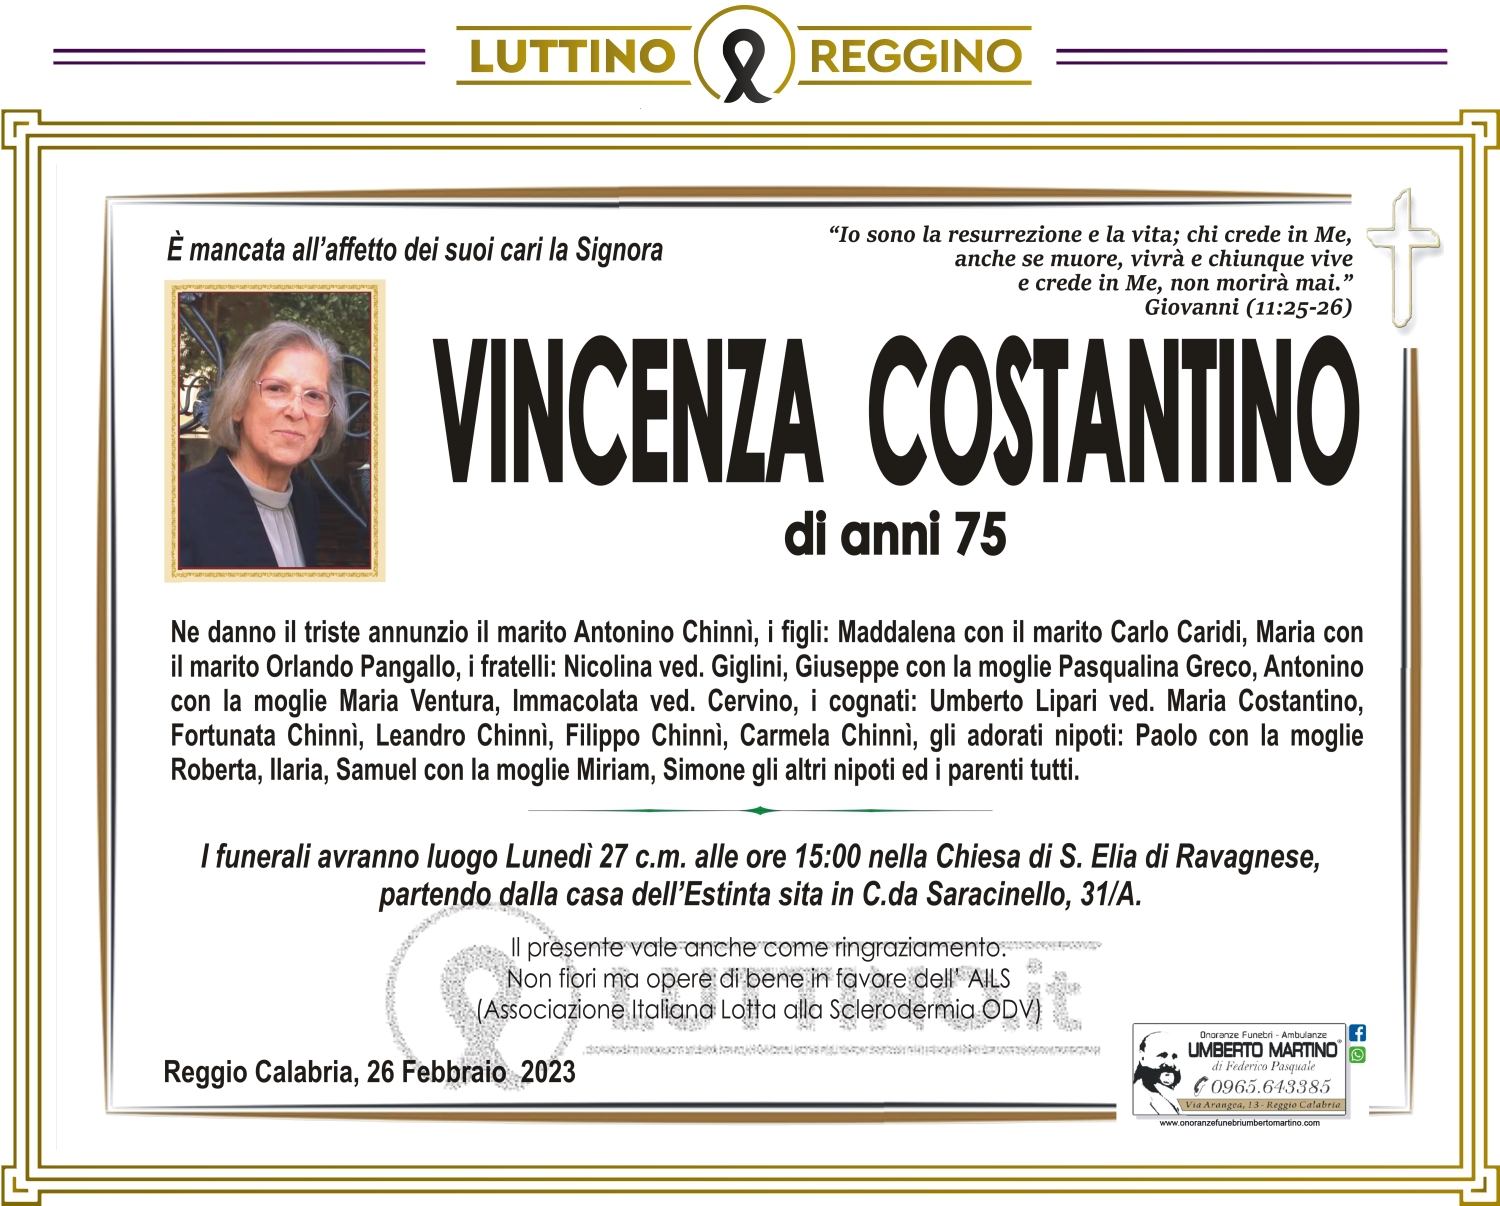 Vincenza Costantino